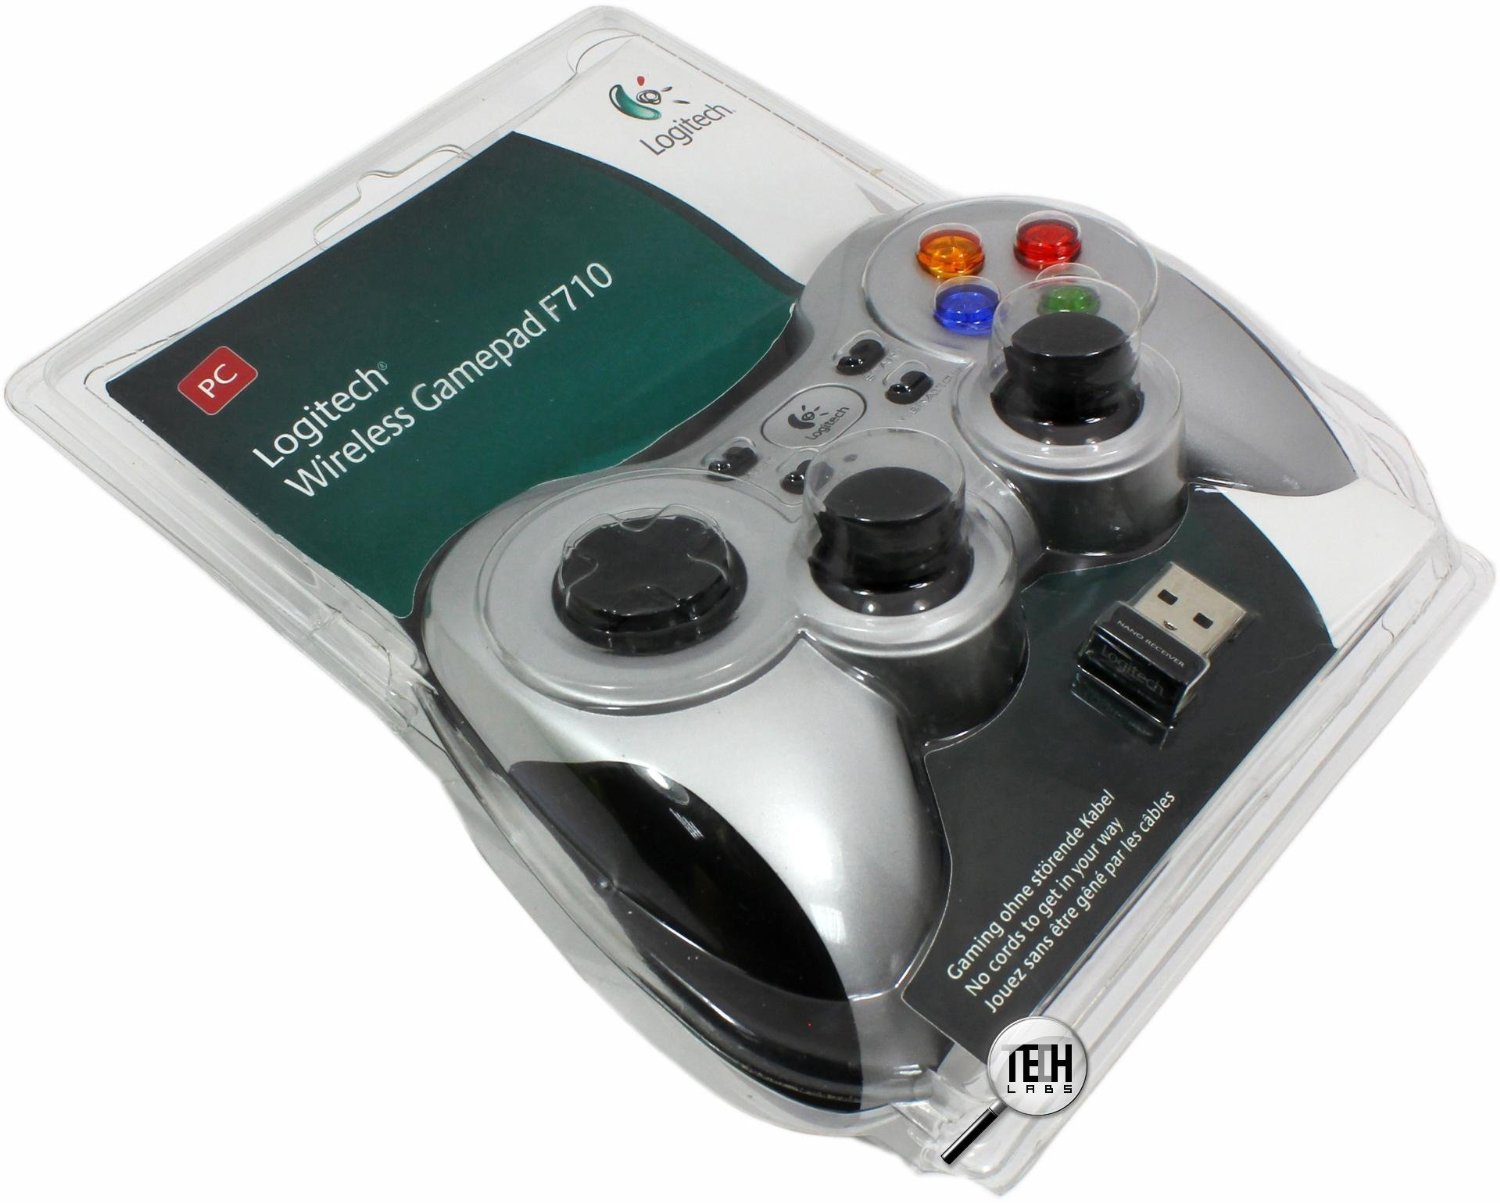 Logitech F710 Original Wireless Gamepad at XGAMERtechnologies